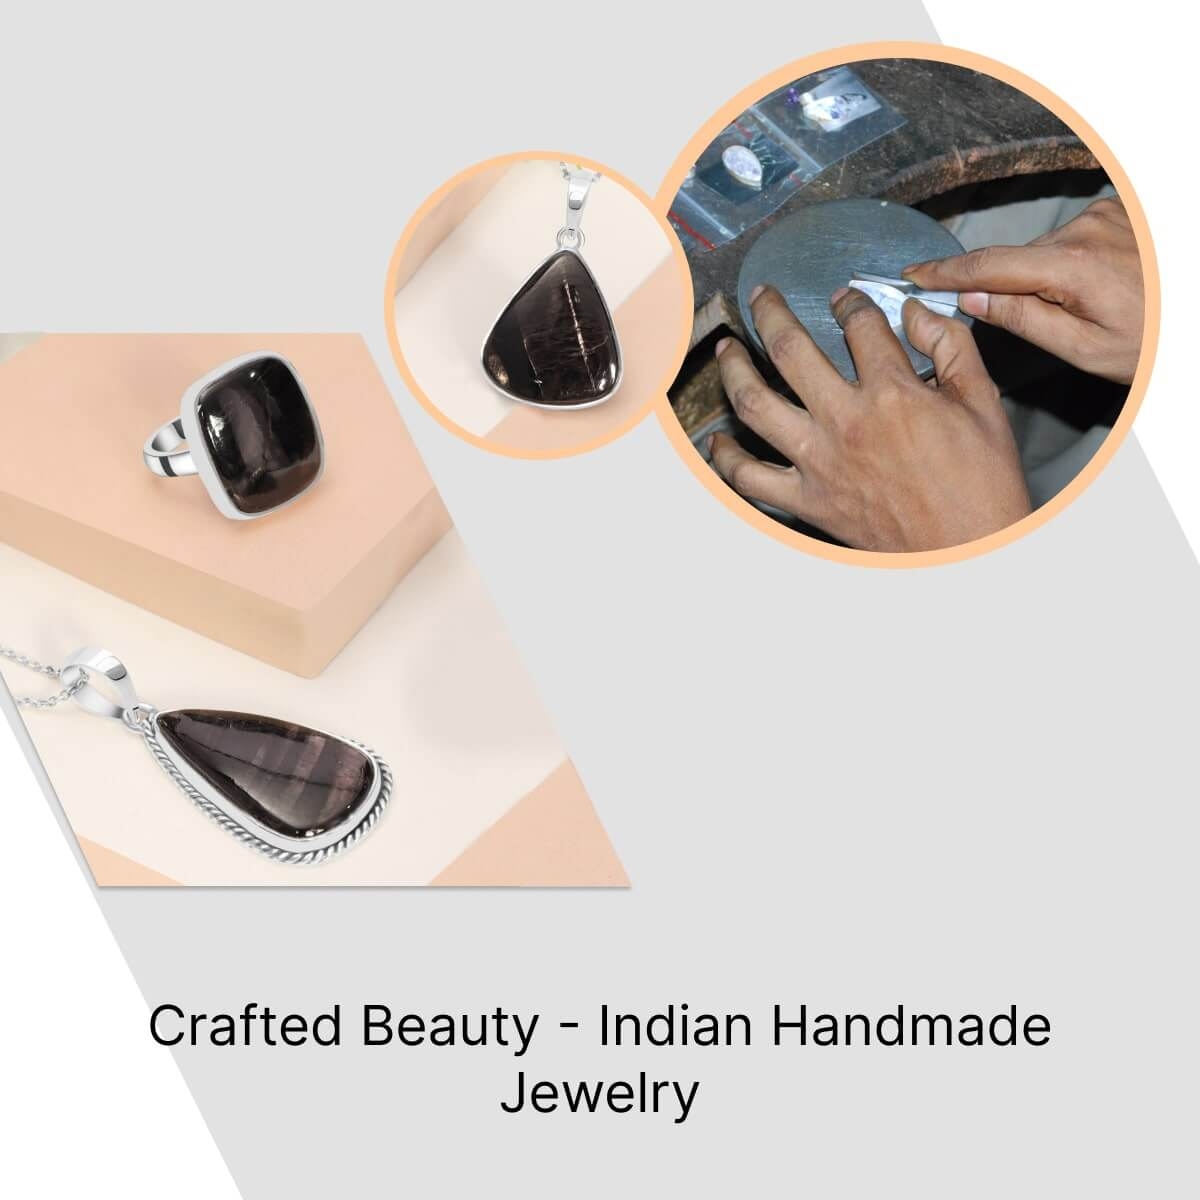 Indian Handmade Jewelry - The Art of Dedication